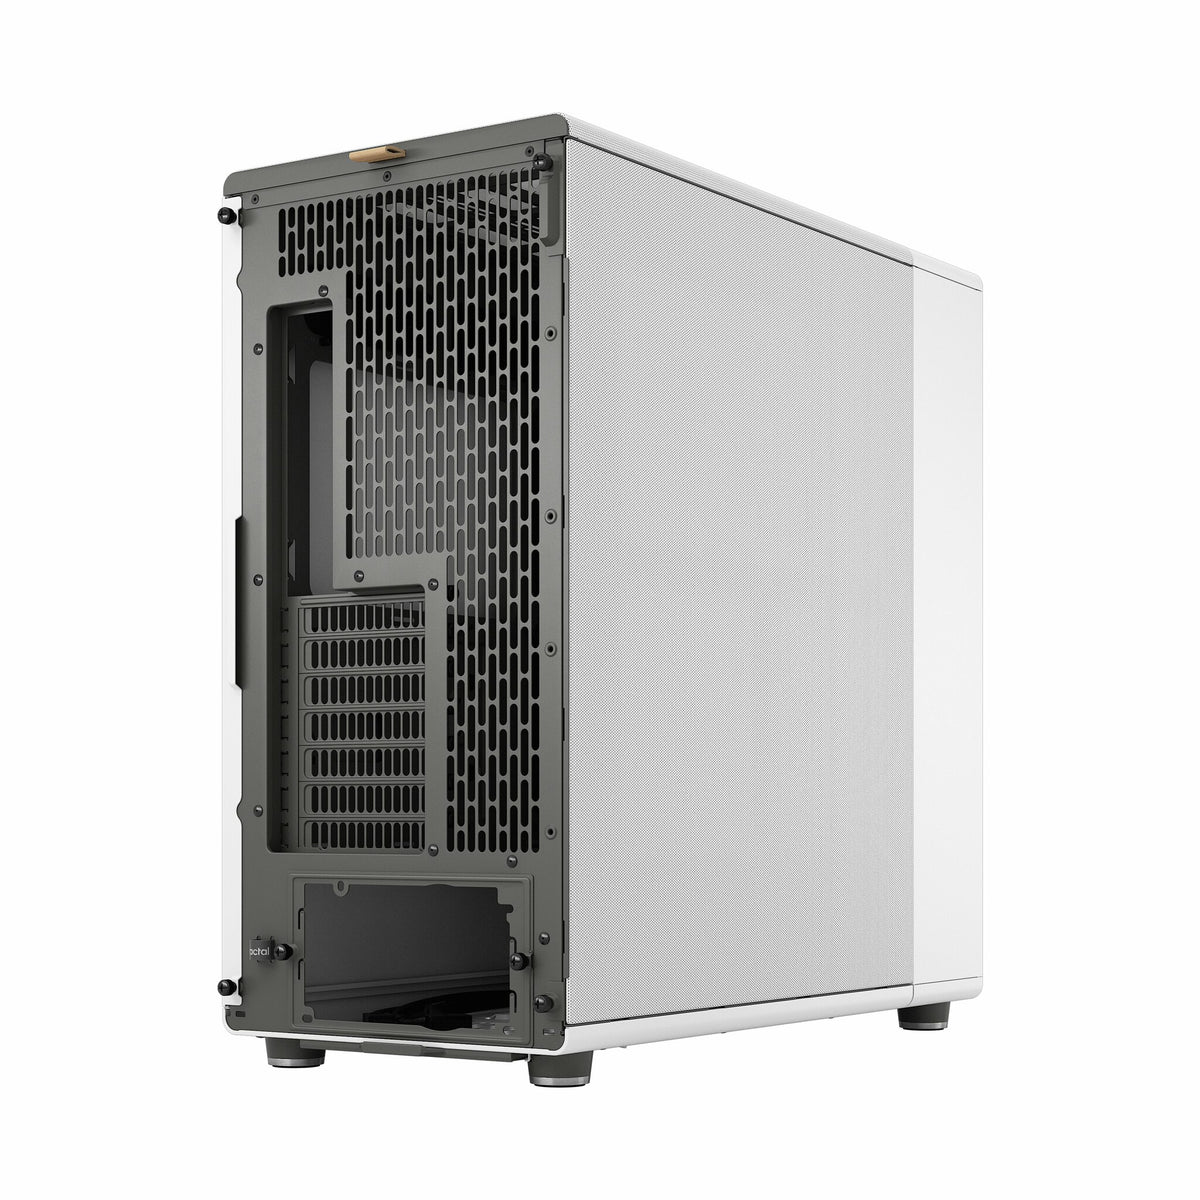 Fractal Design North XL - ATX Full Tower Case in White